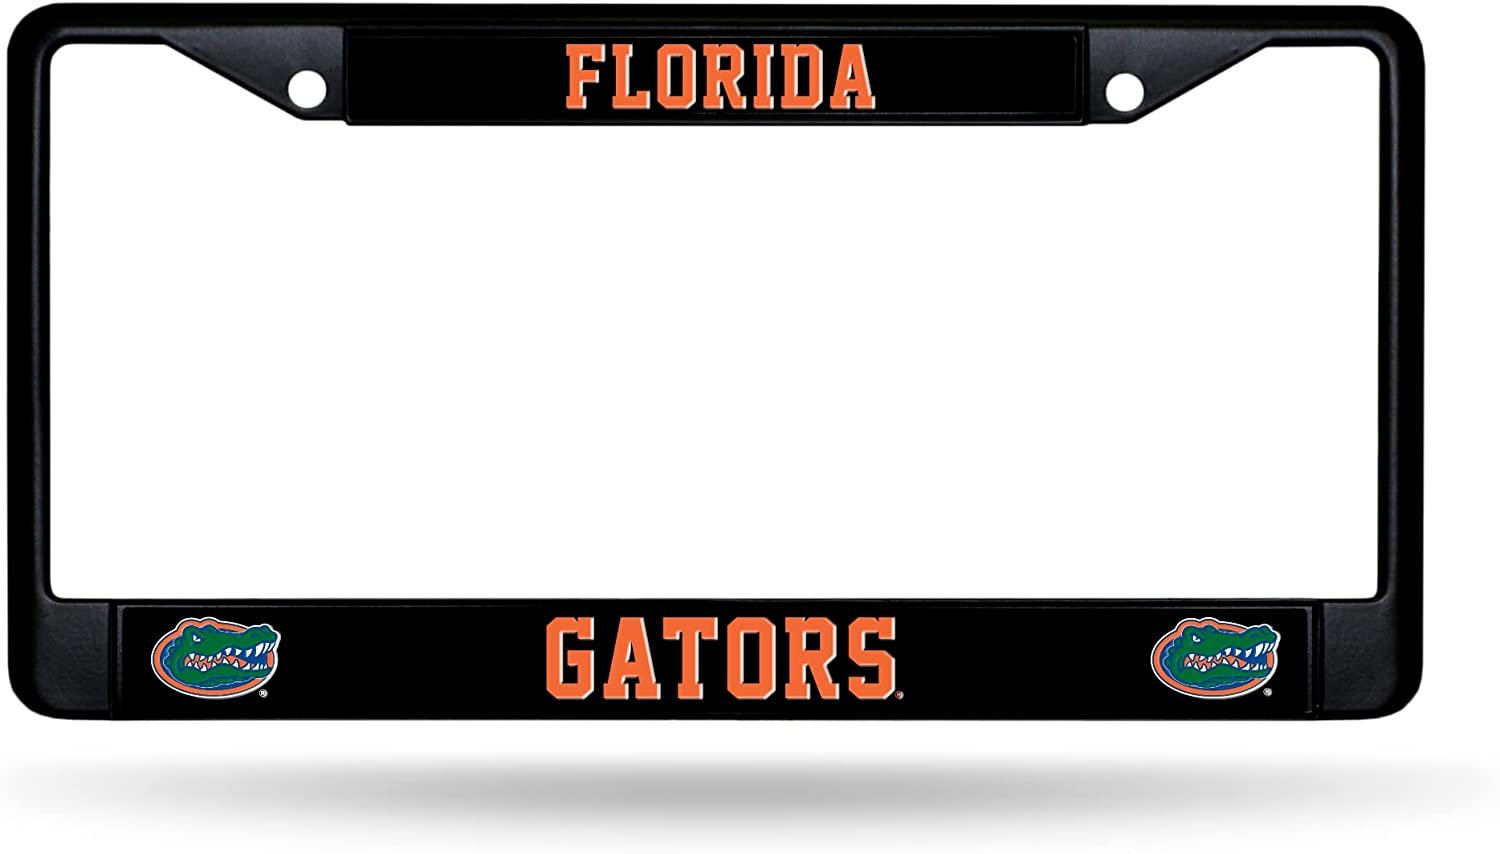 University of Florida Gators Black Metal License Plate Frame Chrome Tag Cover 6x12 Inch